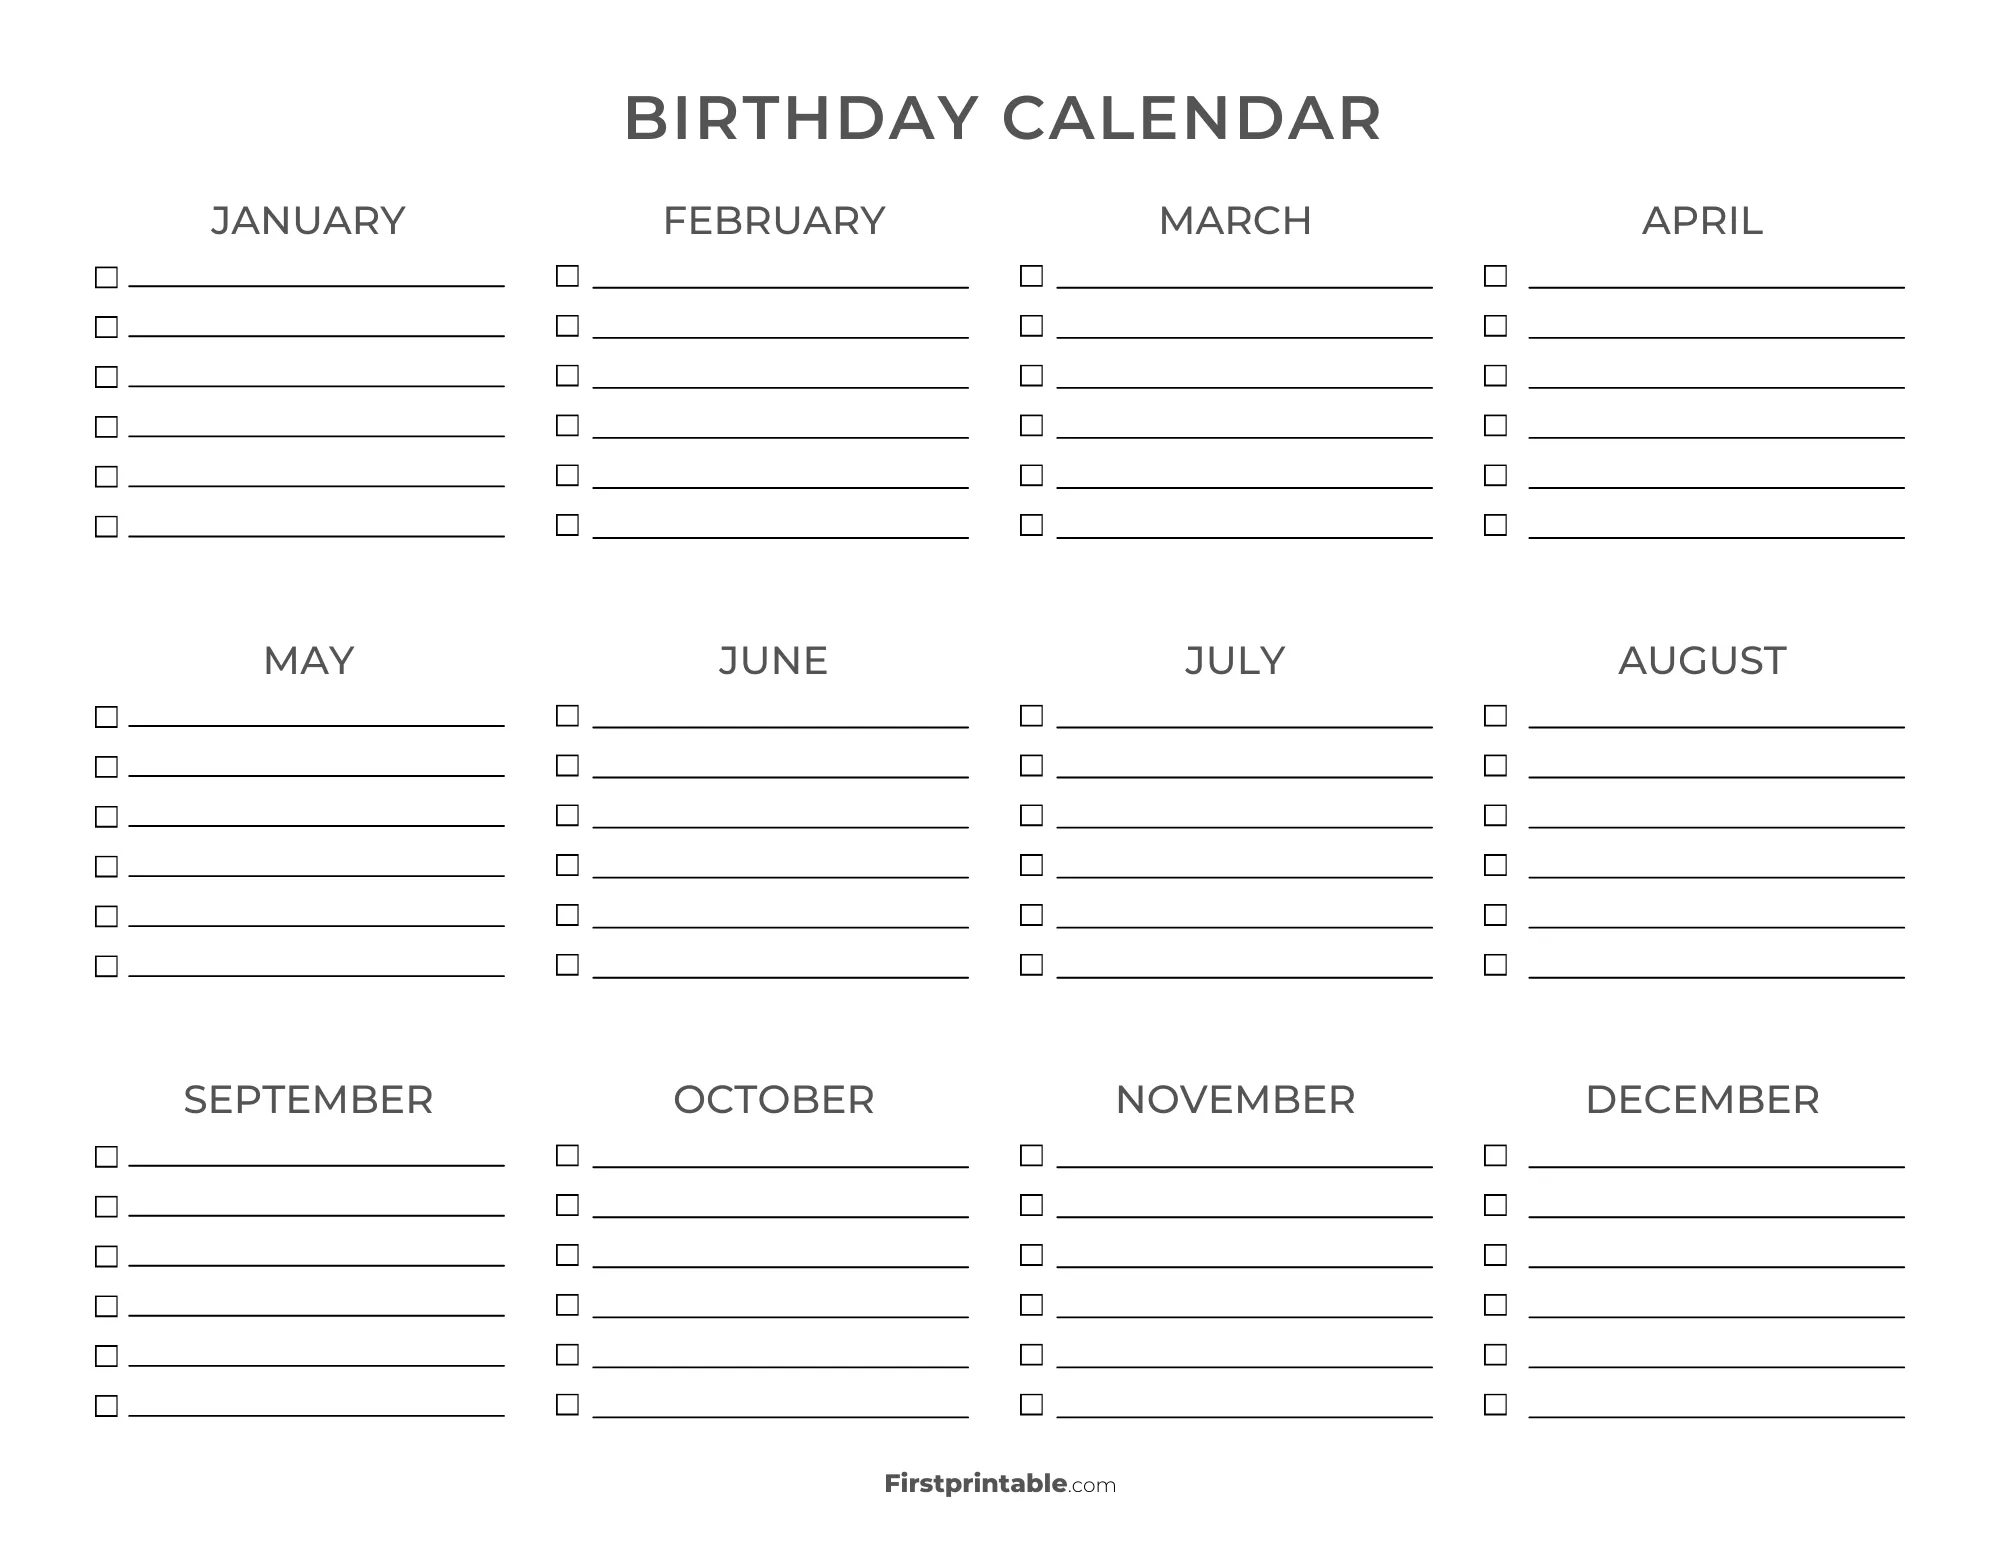 Birthday Calendar Printable Template 19